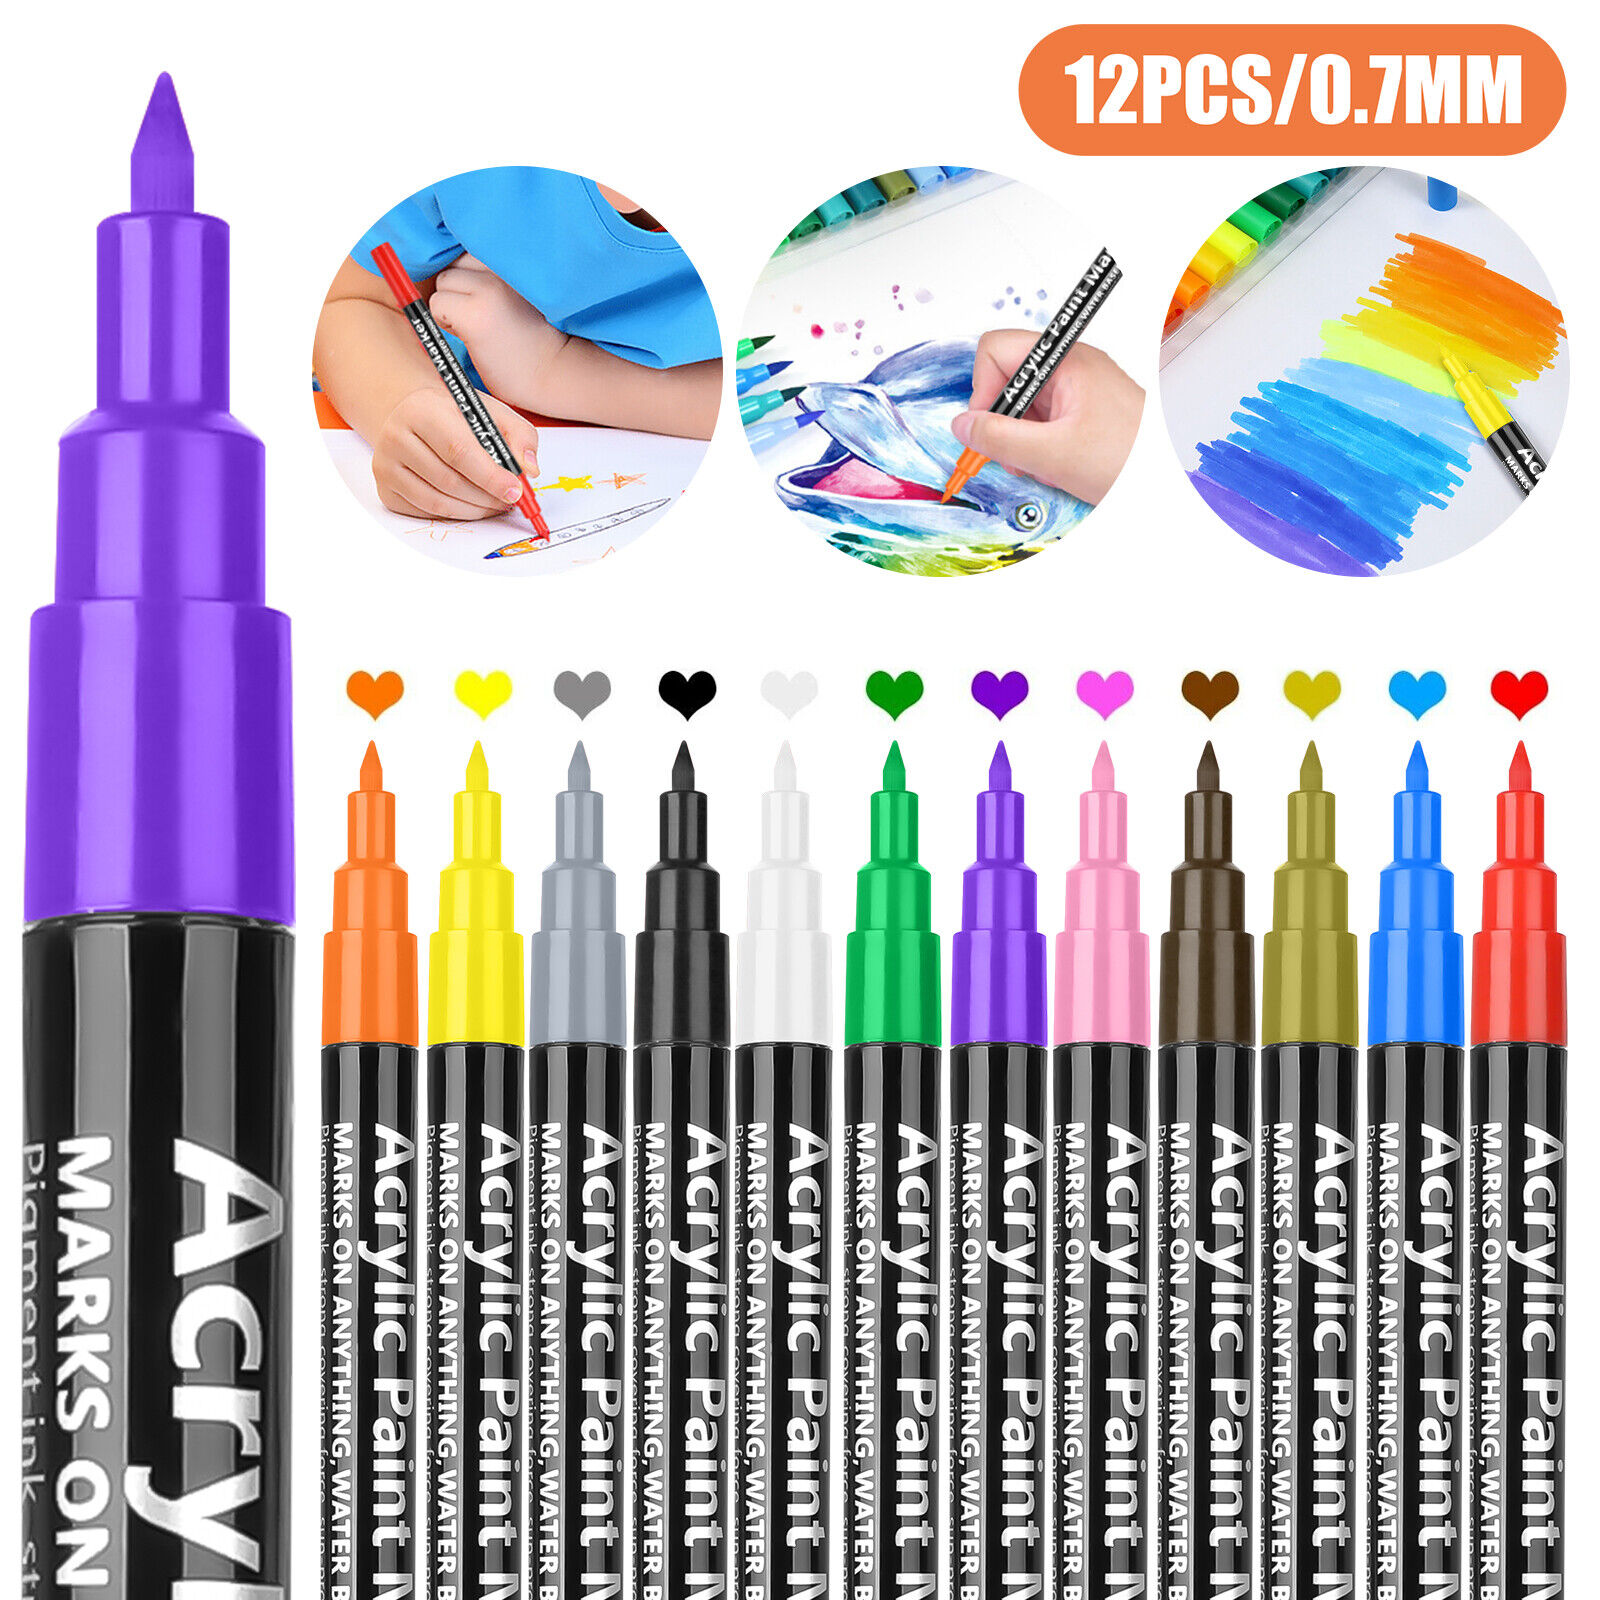 12PCS Acrylic Paint Marker Pens Waterproof Premium Markers Set DIY Art Project